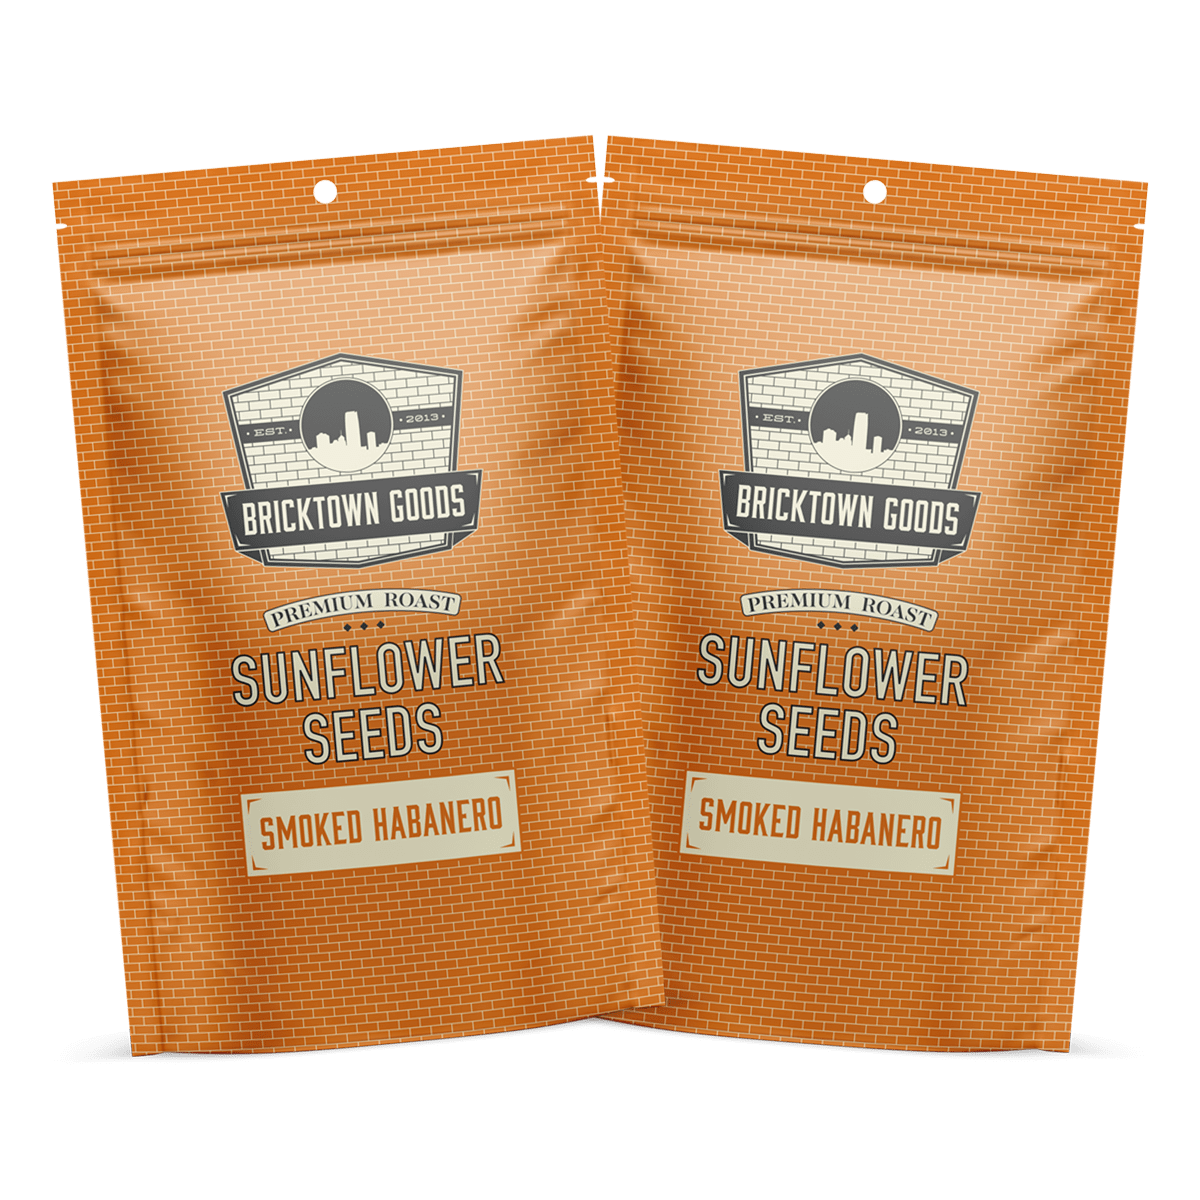 Premium Roast Sunflower Seeds - Smoked Habanero by Bricktown Roasters